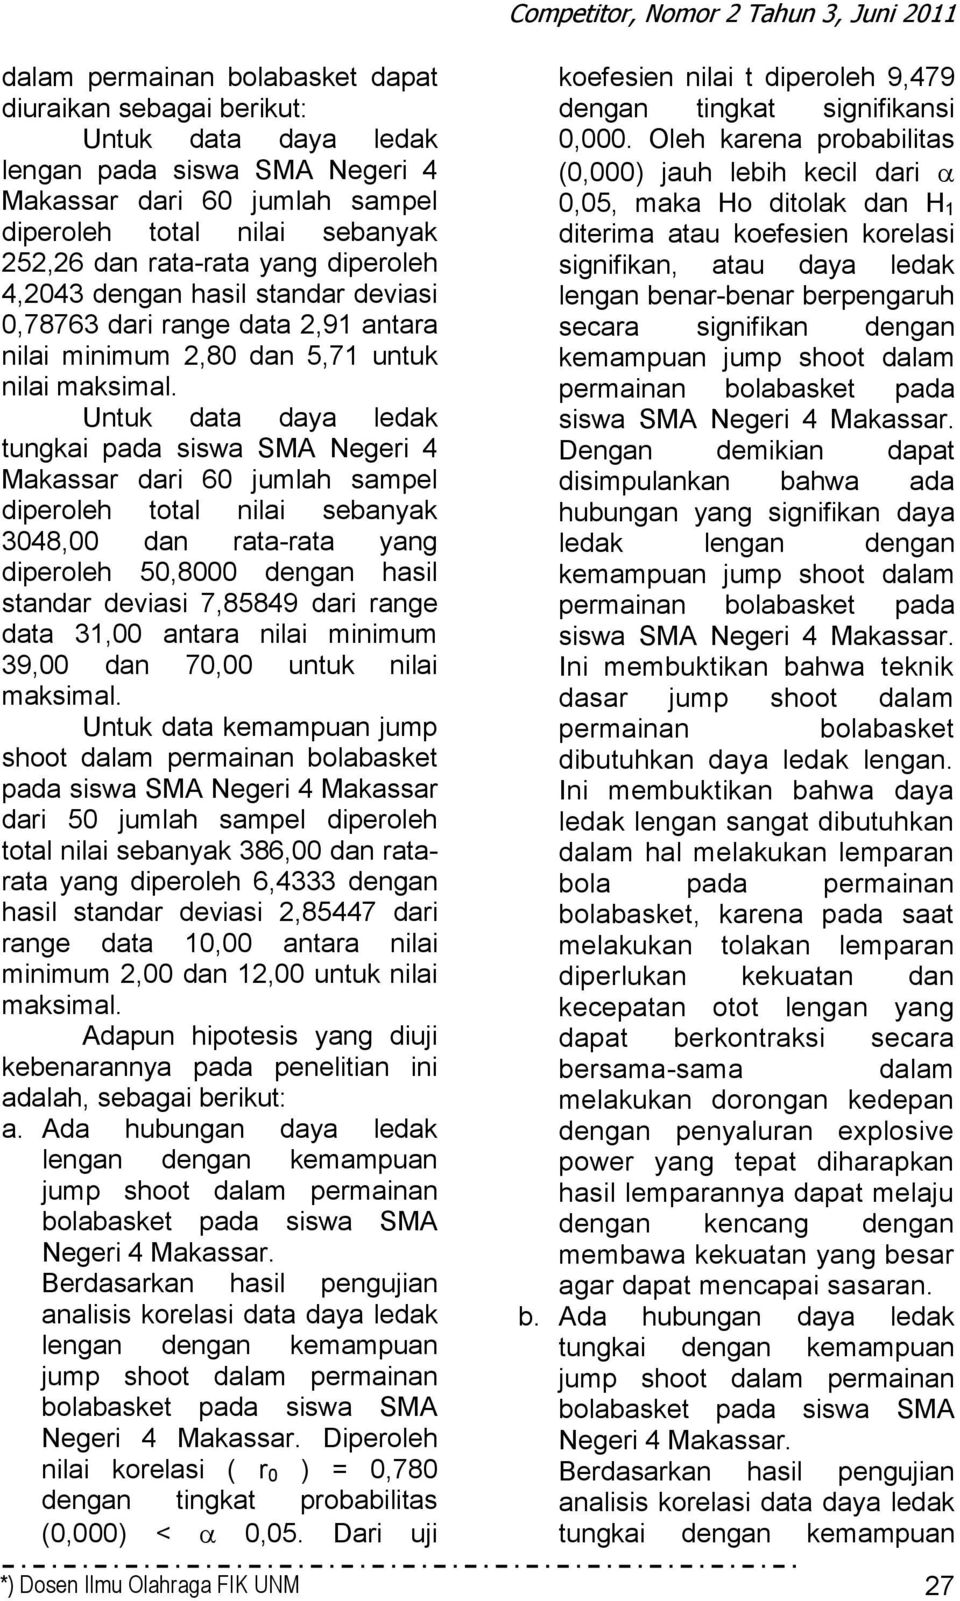 Untuk data daya ledak tungkai pada siswa SMA Negeri 4 Makassar dari 60 jumlah sampel diperoleh total nilai sebanyak 3048,00 dan rata-rata yang diperoleh 50,8000 dengan hasil standar deviasi 7,85849